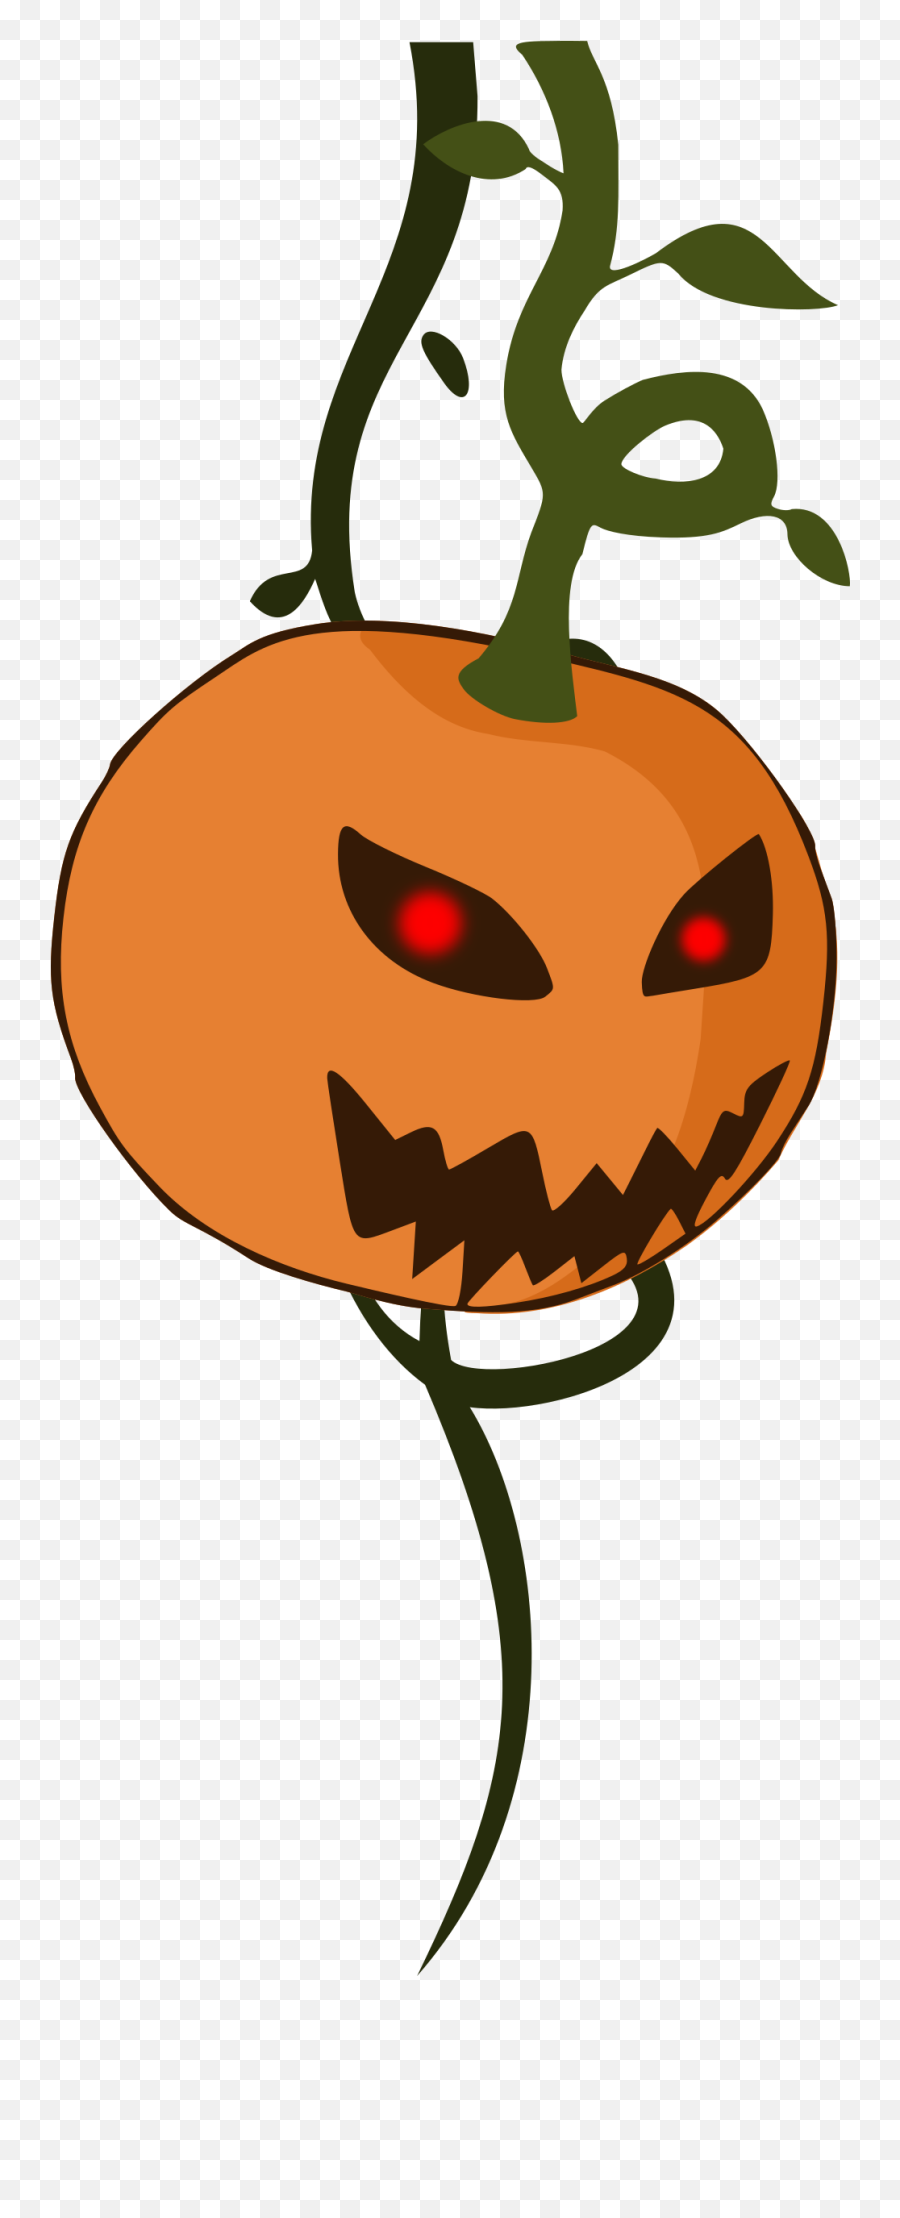 Download Hd Cartoon Jack O Lantern Pumpkin - Halloween Cartoon Jack O Lantern Emoji,Jack O'lantern Emoji